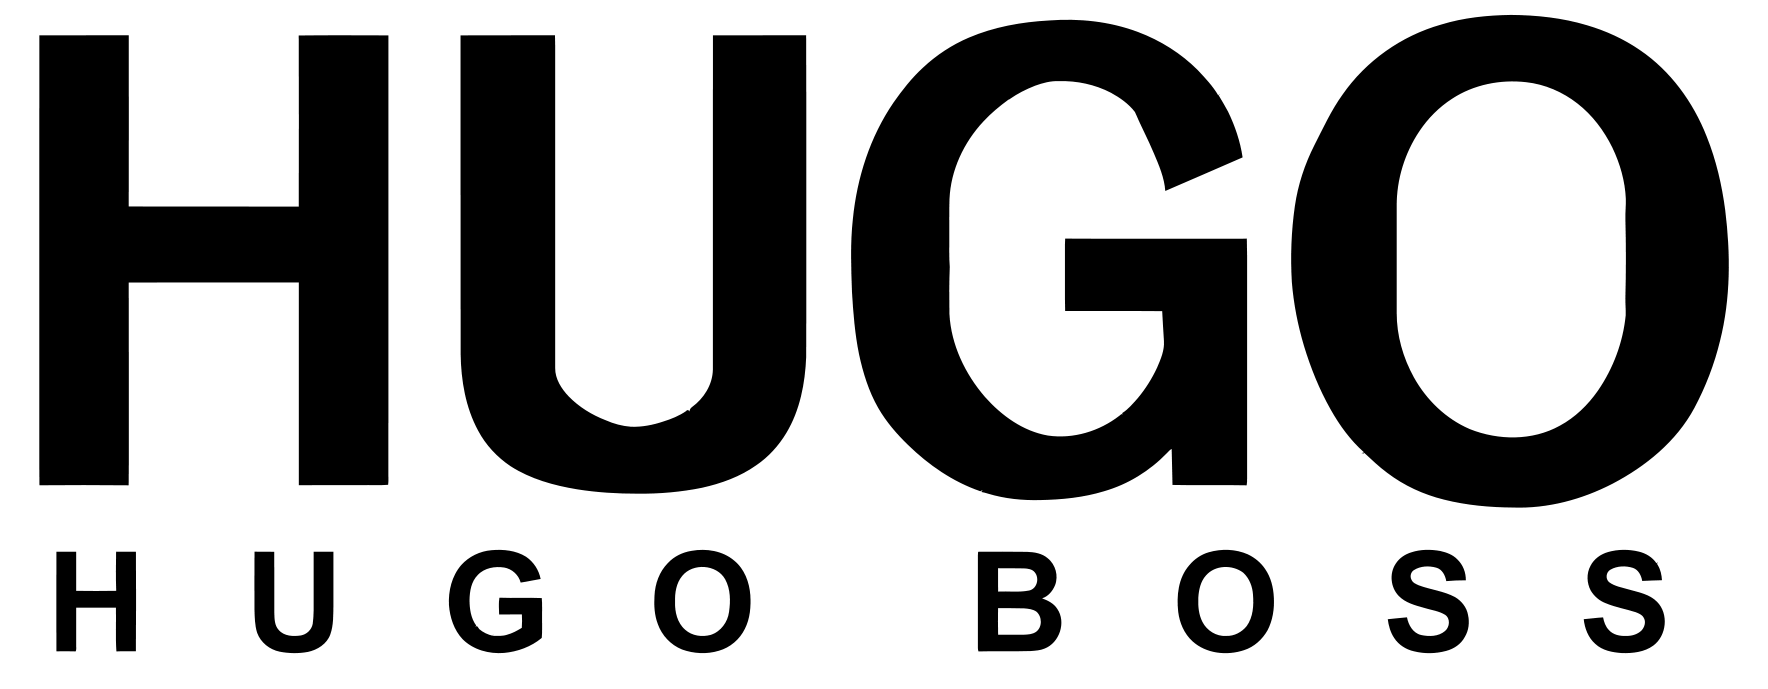 Hugo Boss Logo - Hugo-Boss-Logos - M&N Health and Beauty